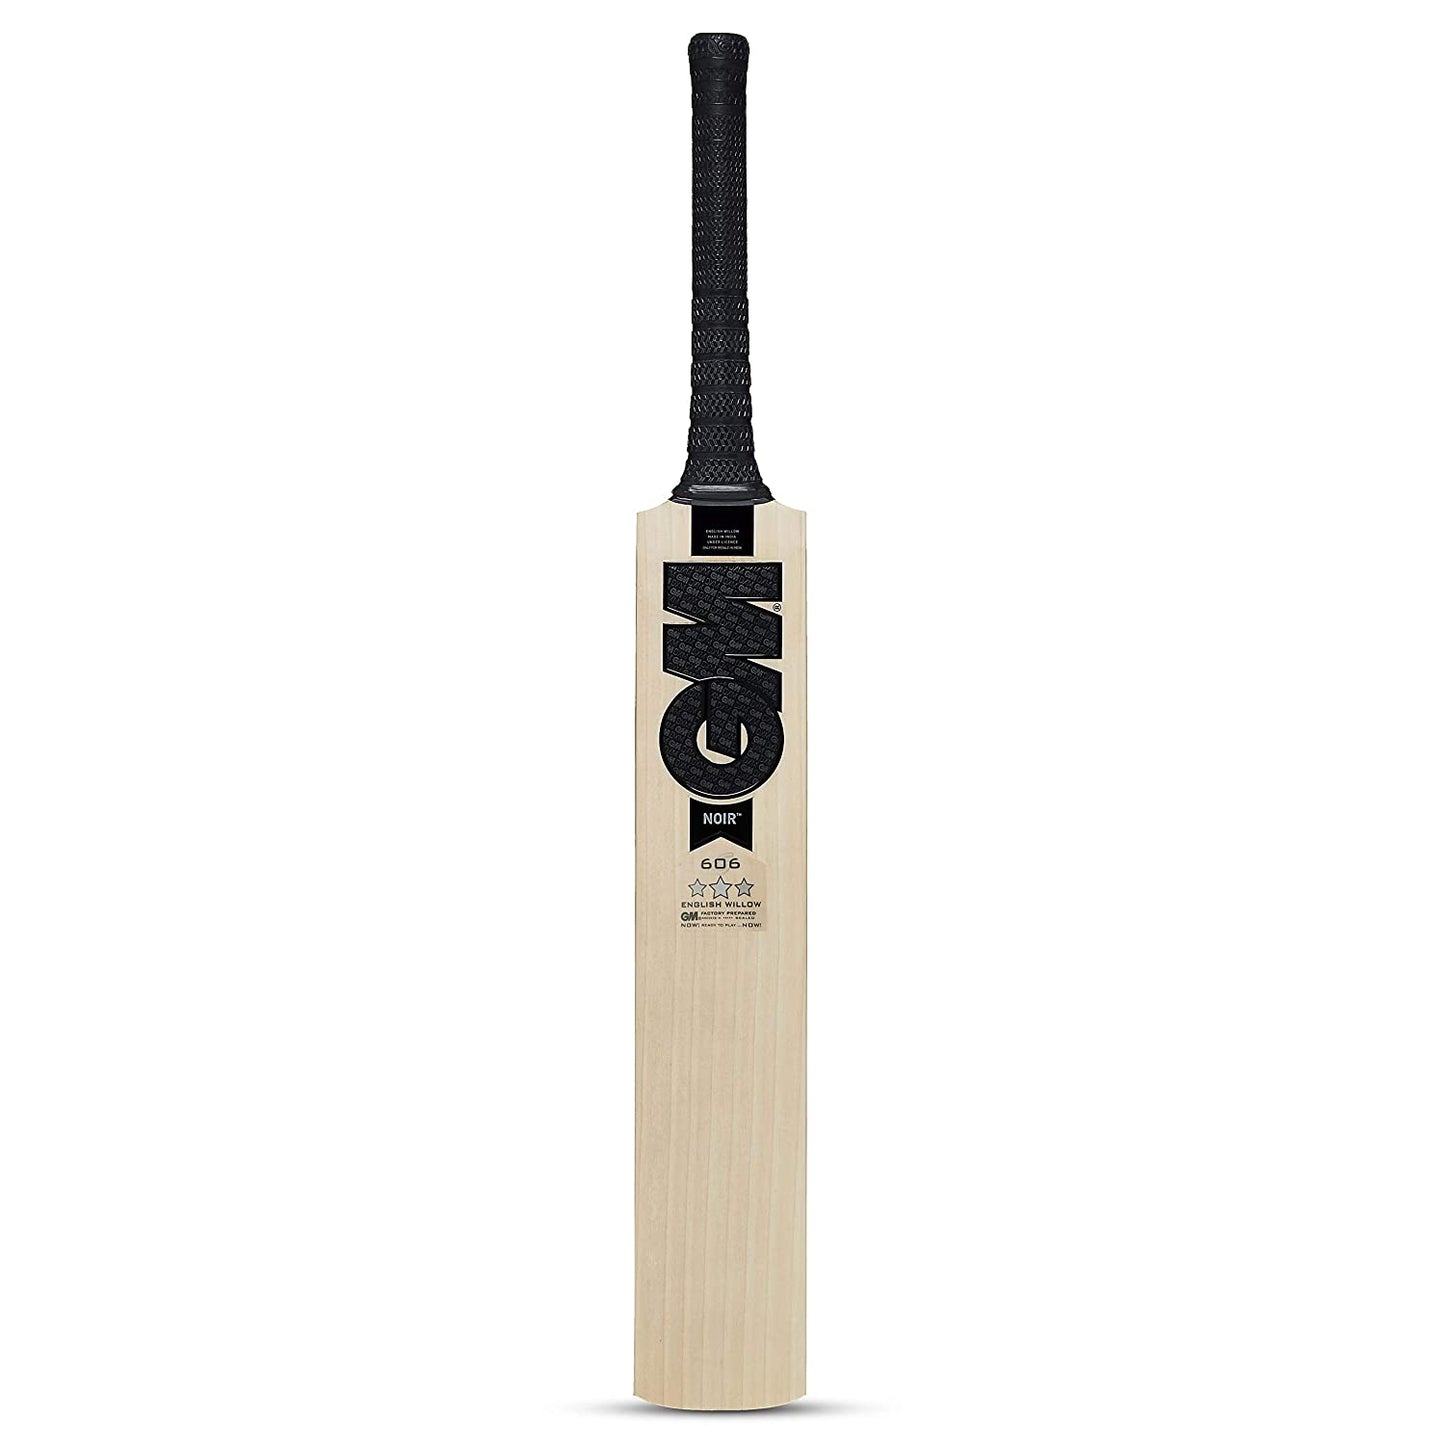 GM Noir 606 English Willow Cricket Bat - Best Price online Prokicksports.com